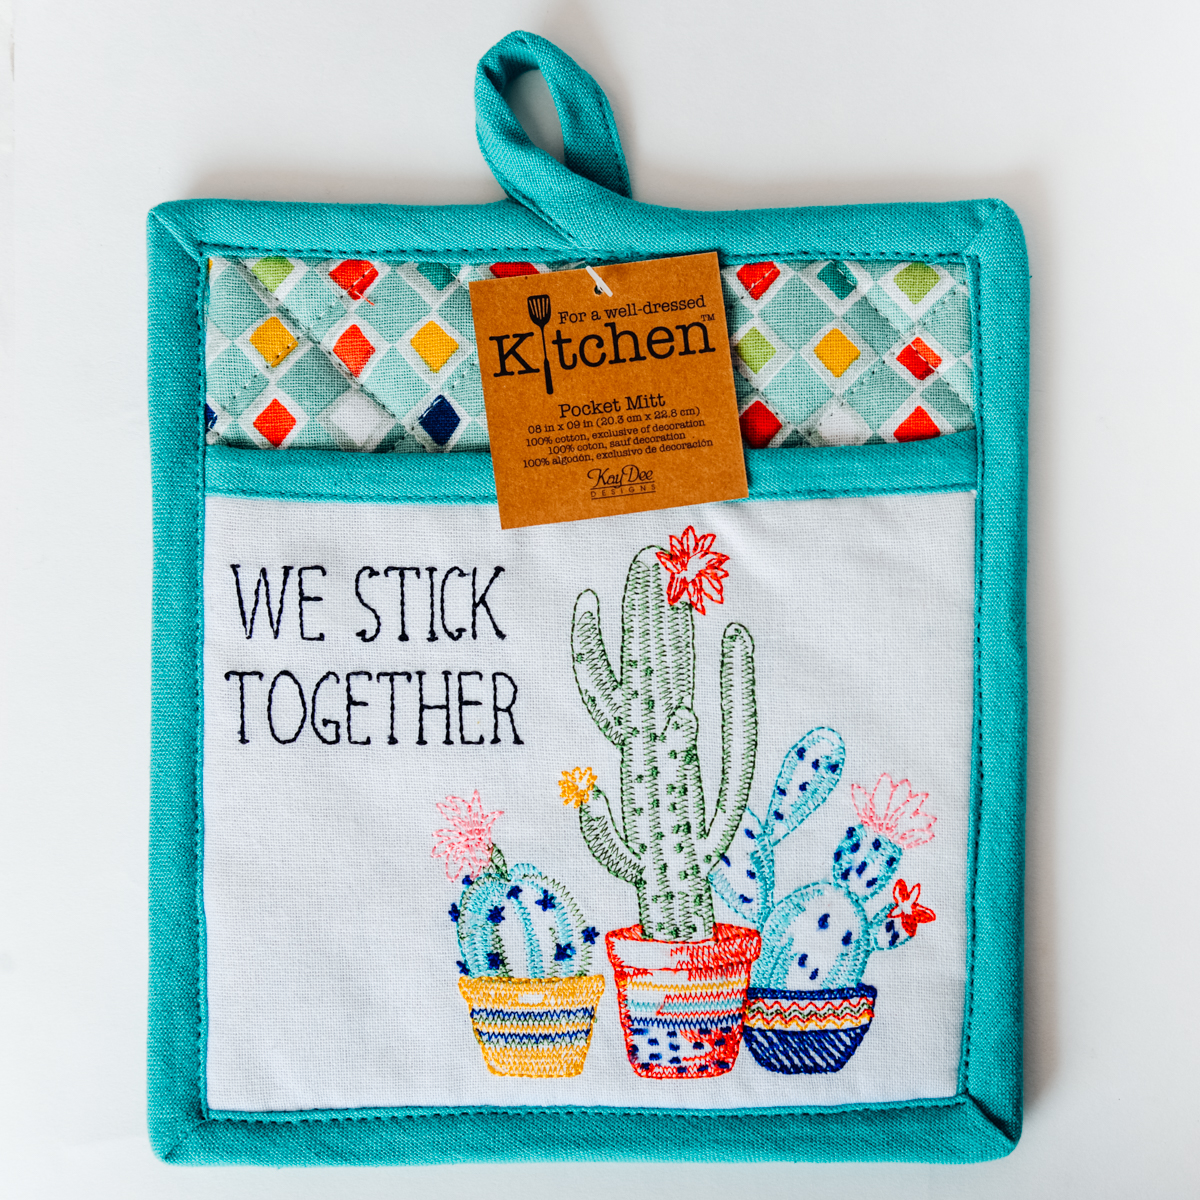 Cactus Garden We Stick Together Embroidered Kitchen Pocket Mitt Tohono Chul